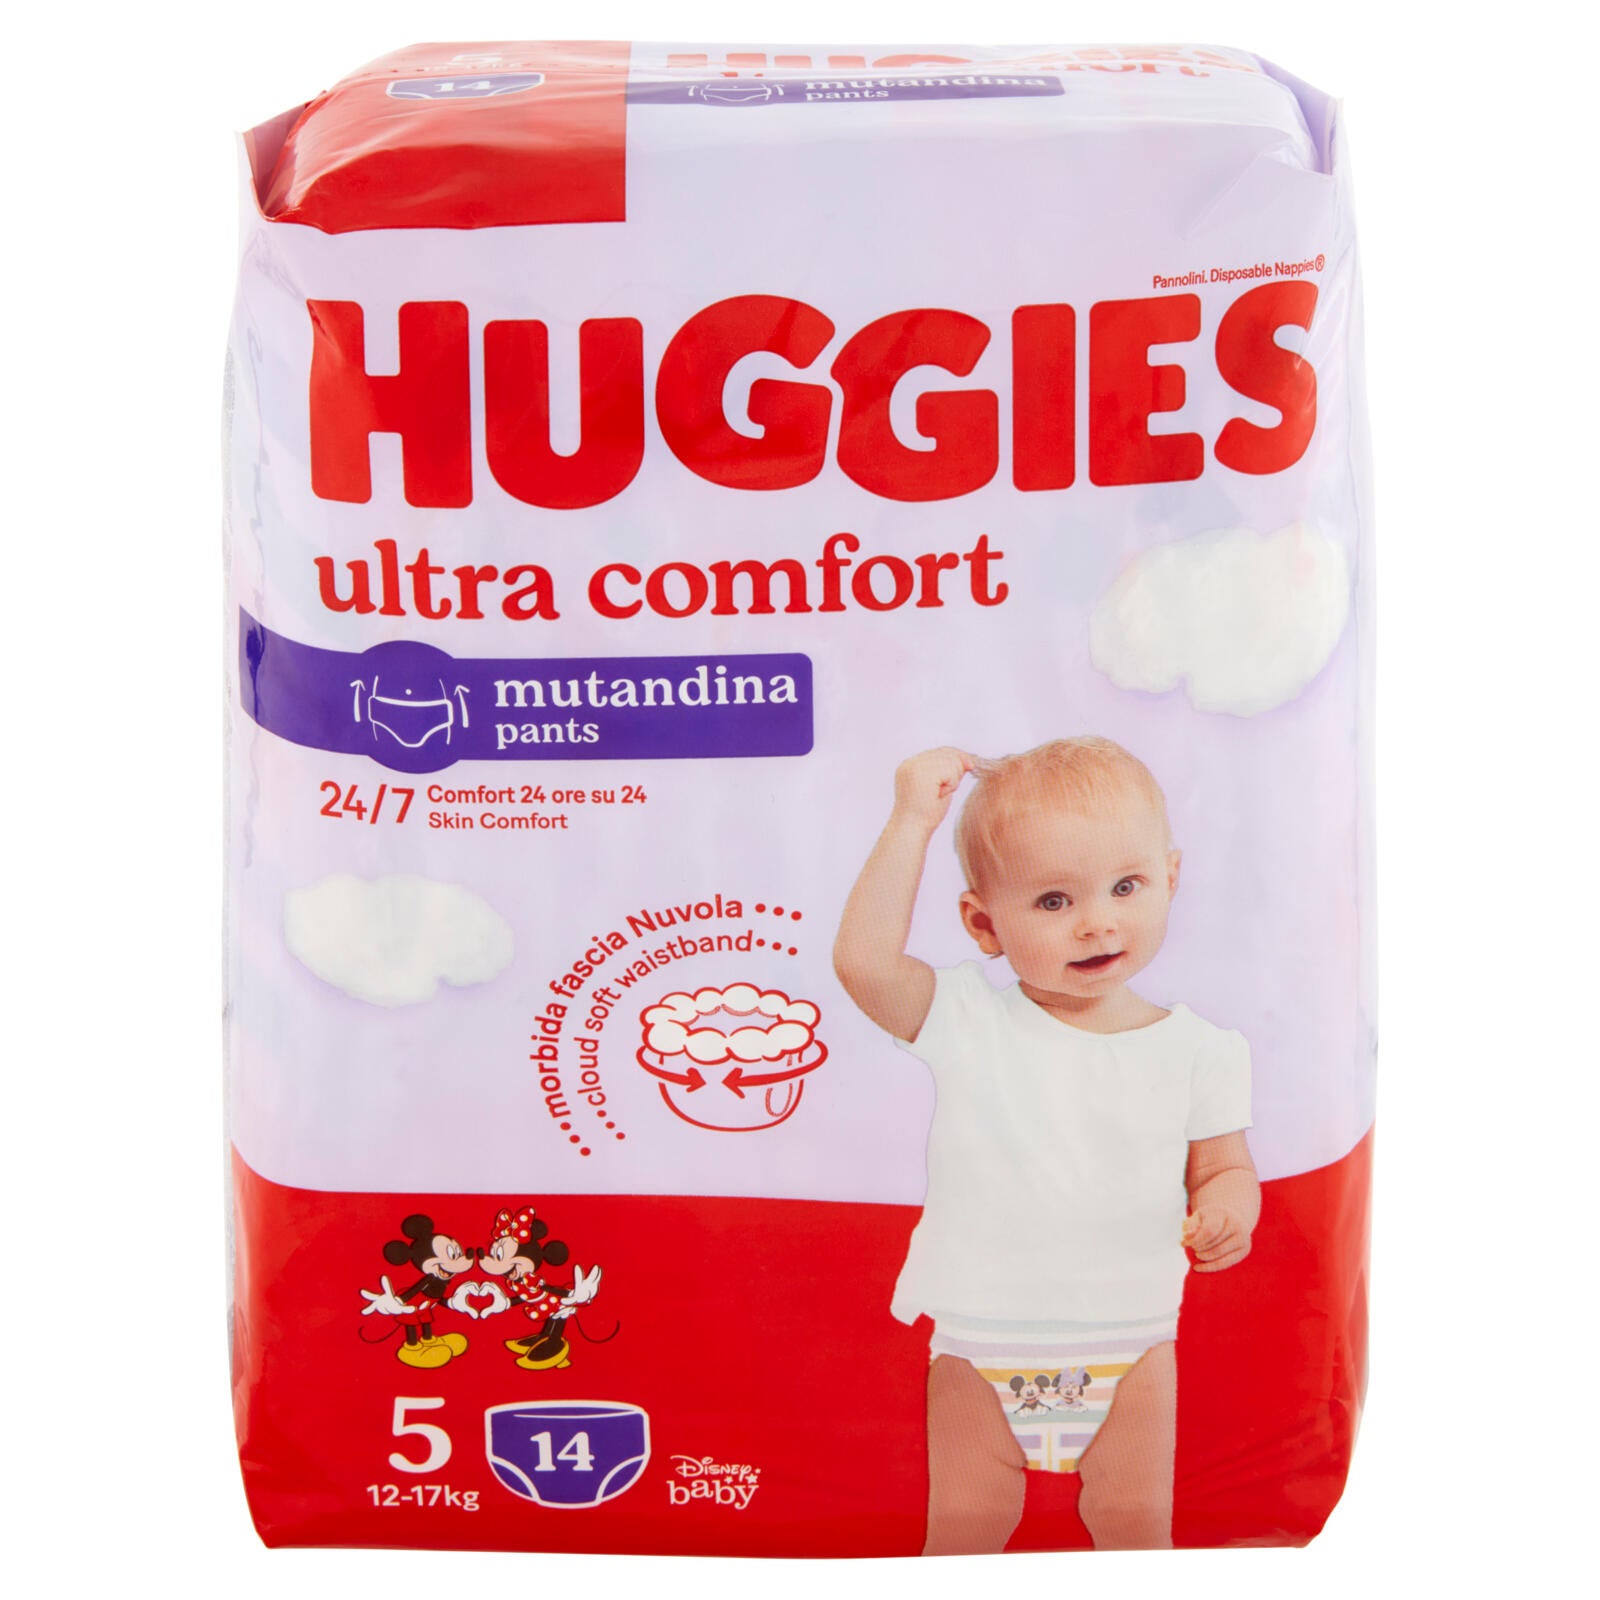 Huggies ultra comfort mutandina 5 12-17 Kg 14 pz